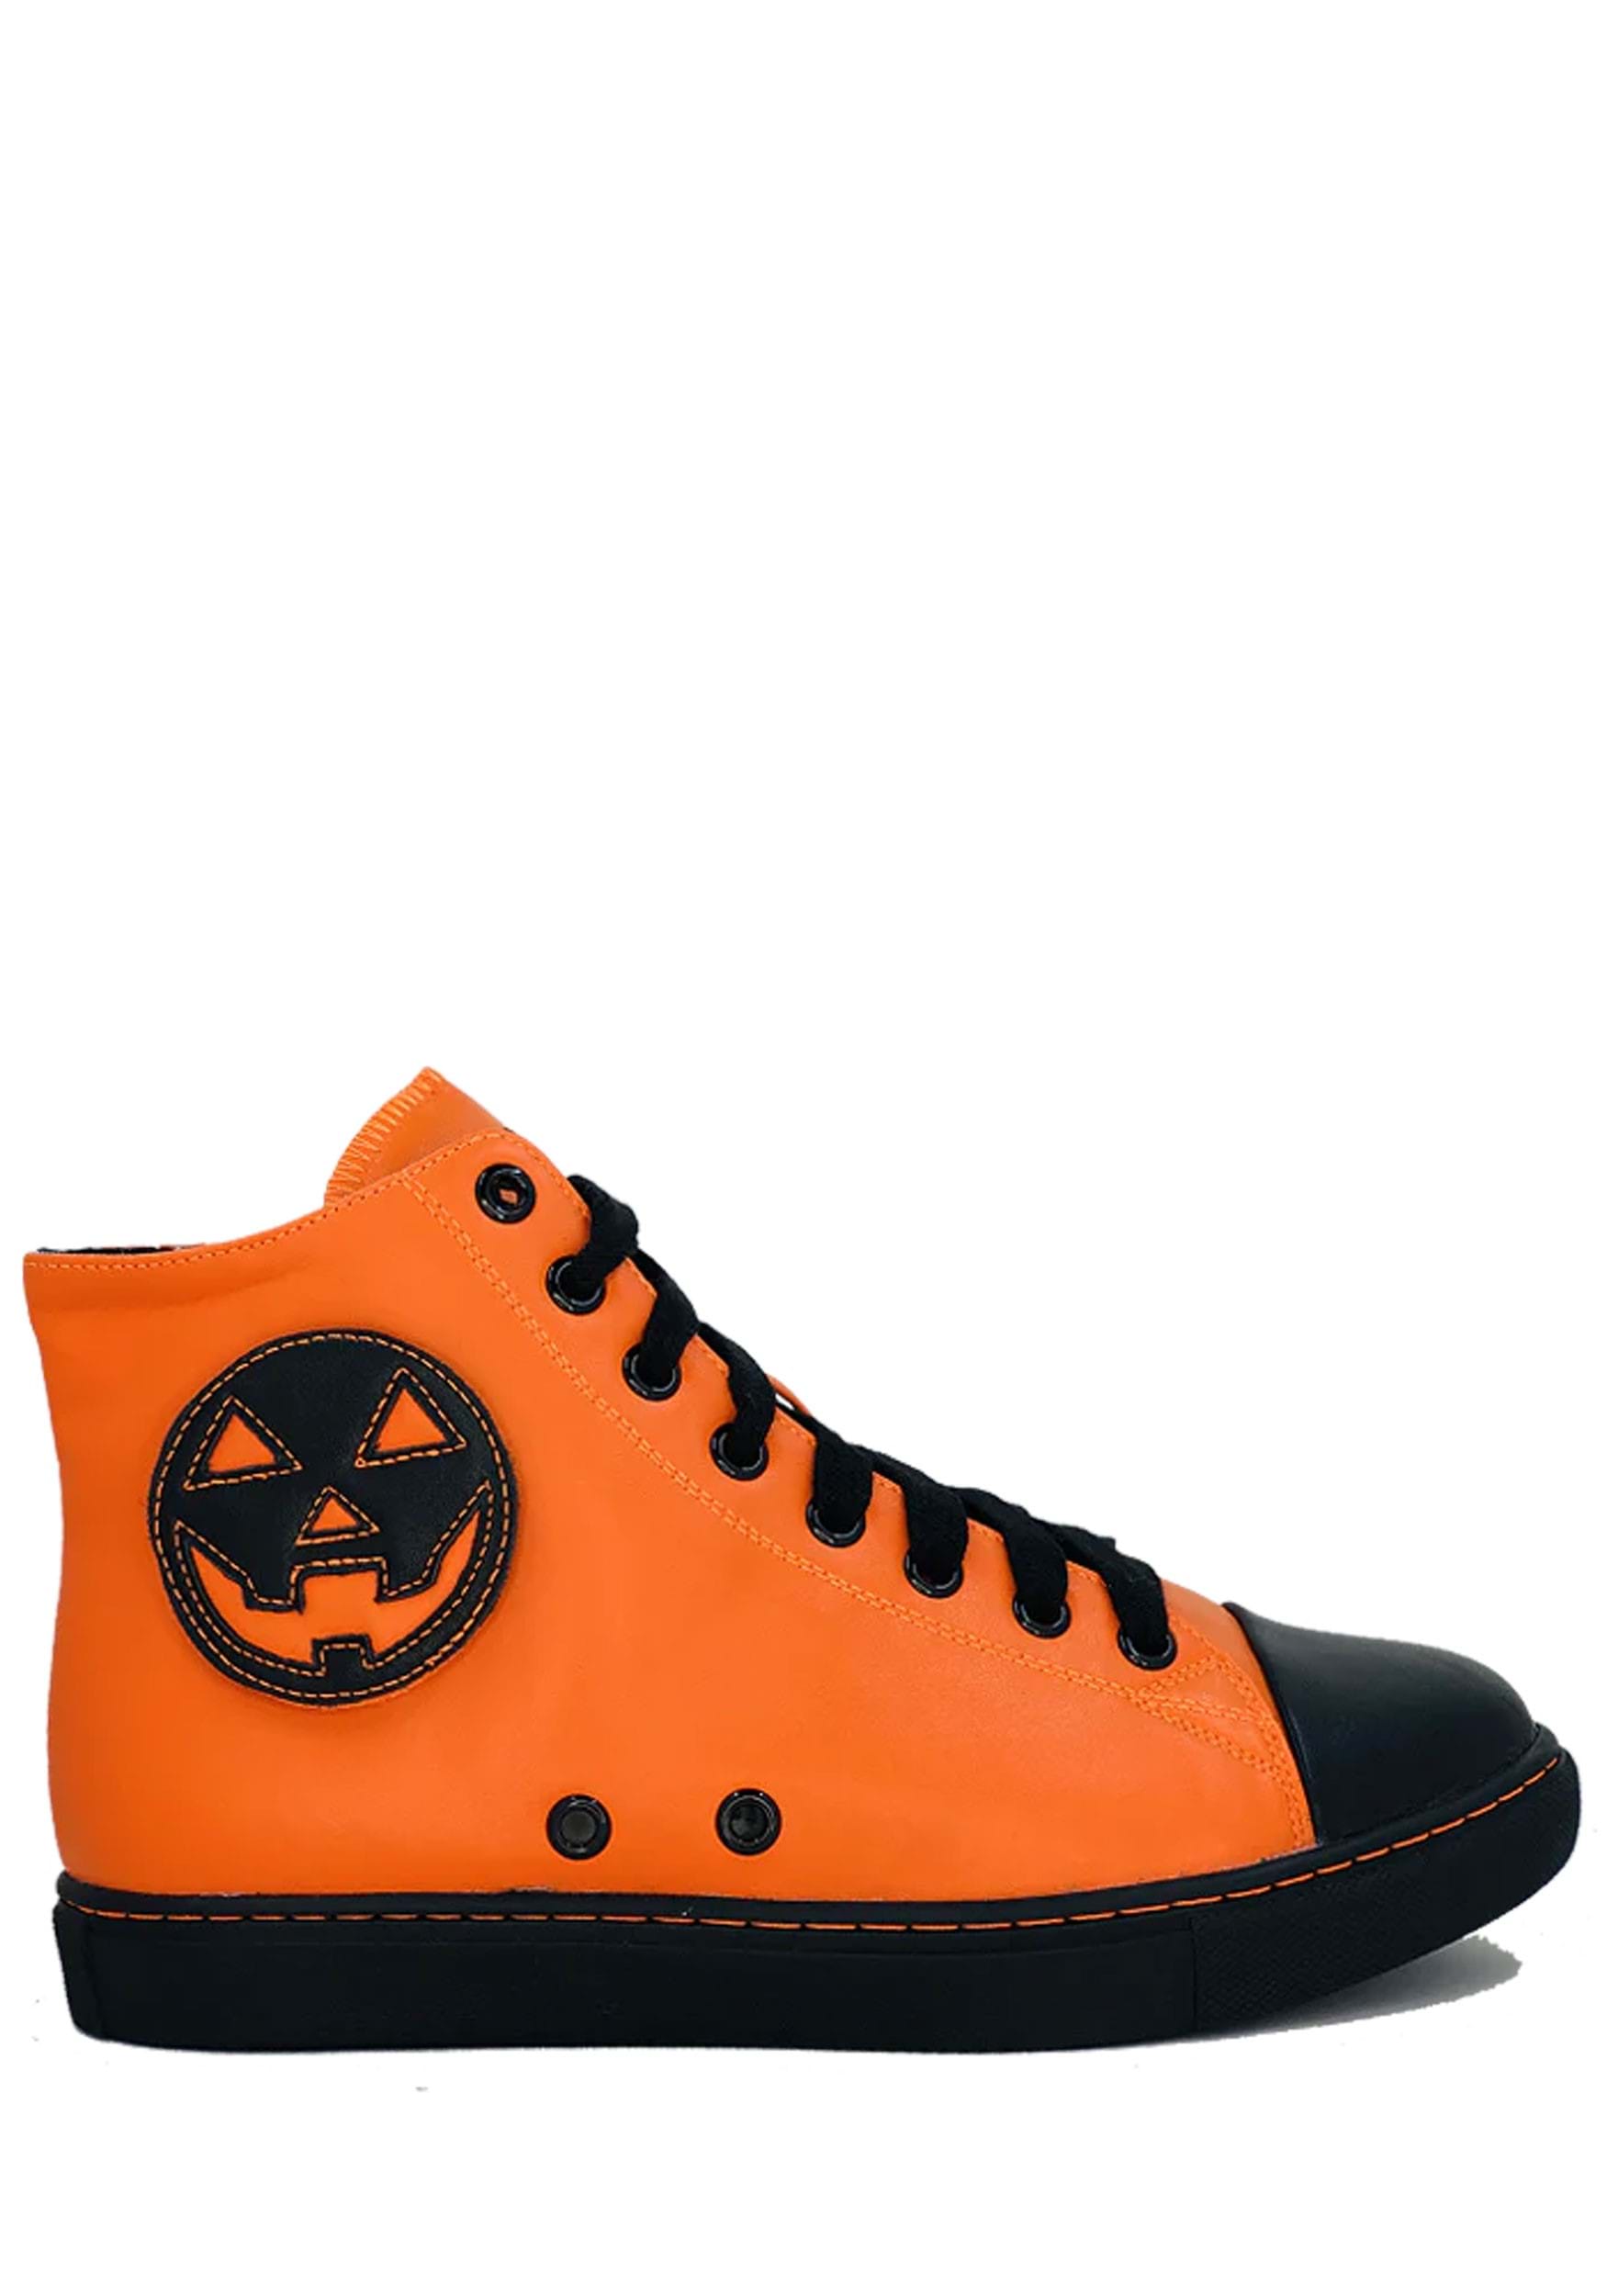 Image of Women's Orange Pumpkin Chelsea Jack High Top Sneaker | Halloween Footwear ID SVCHELSEAJACK-OR-9